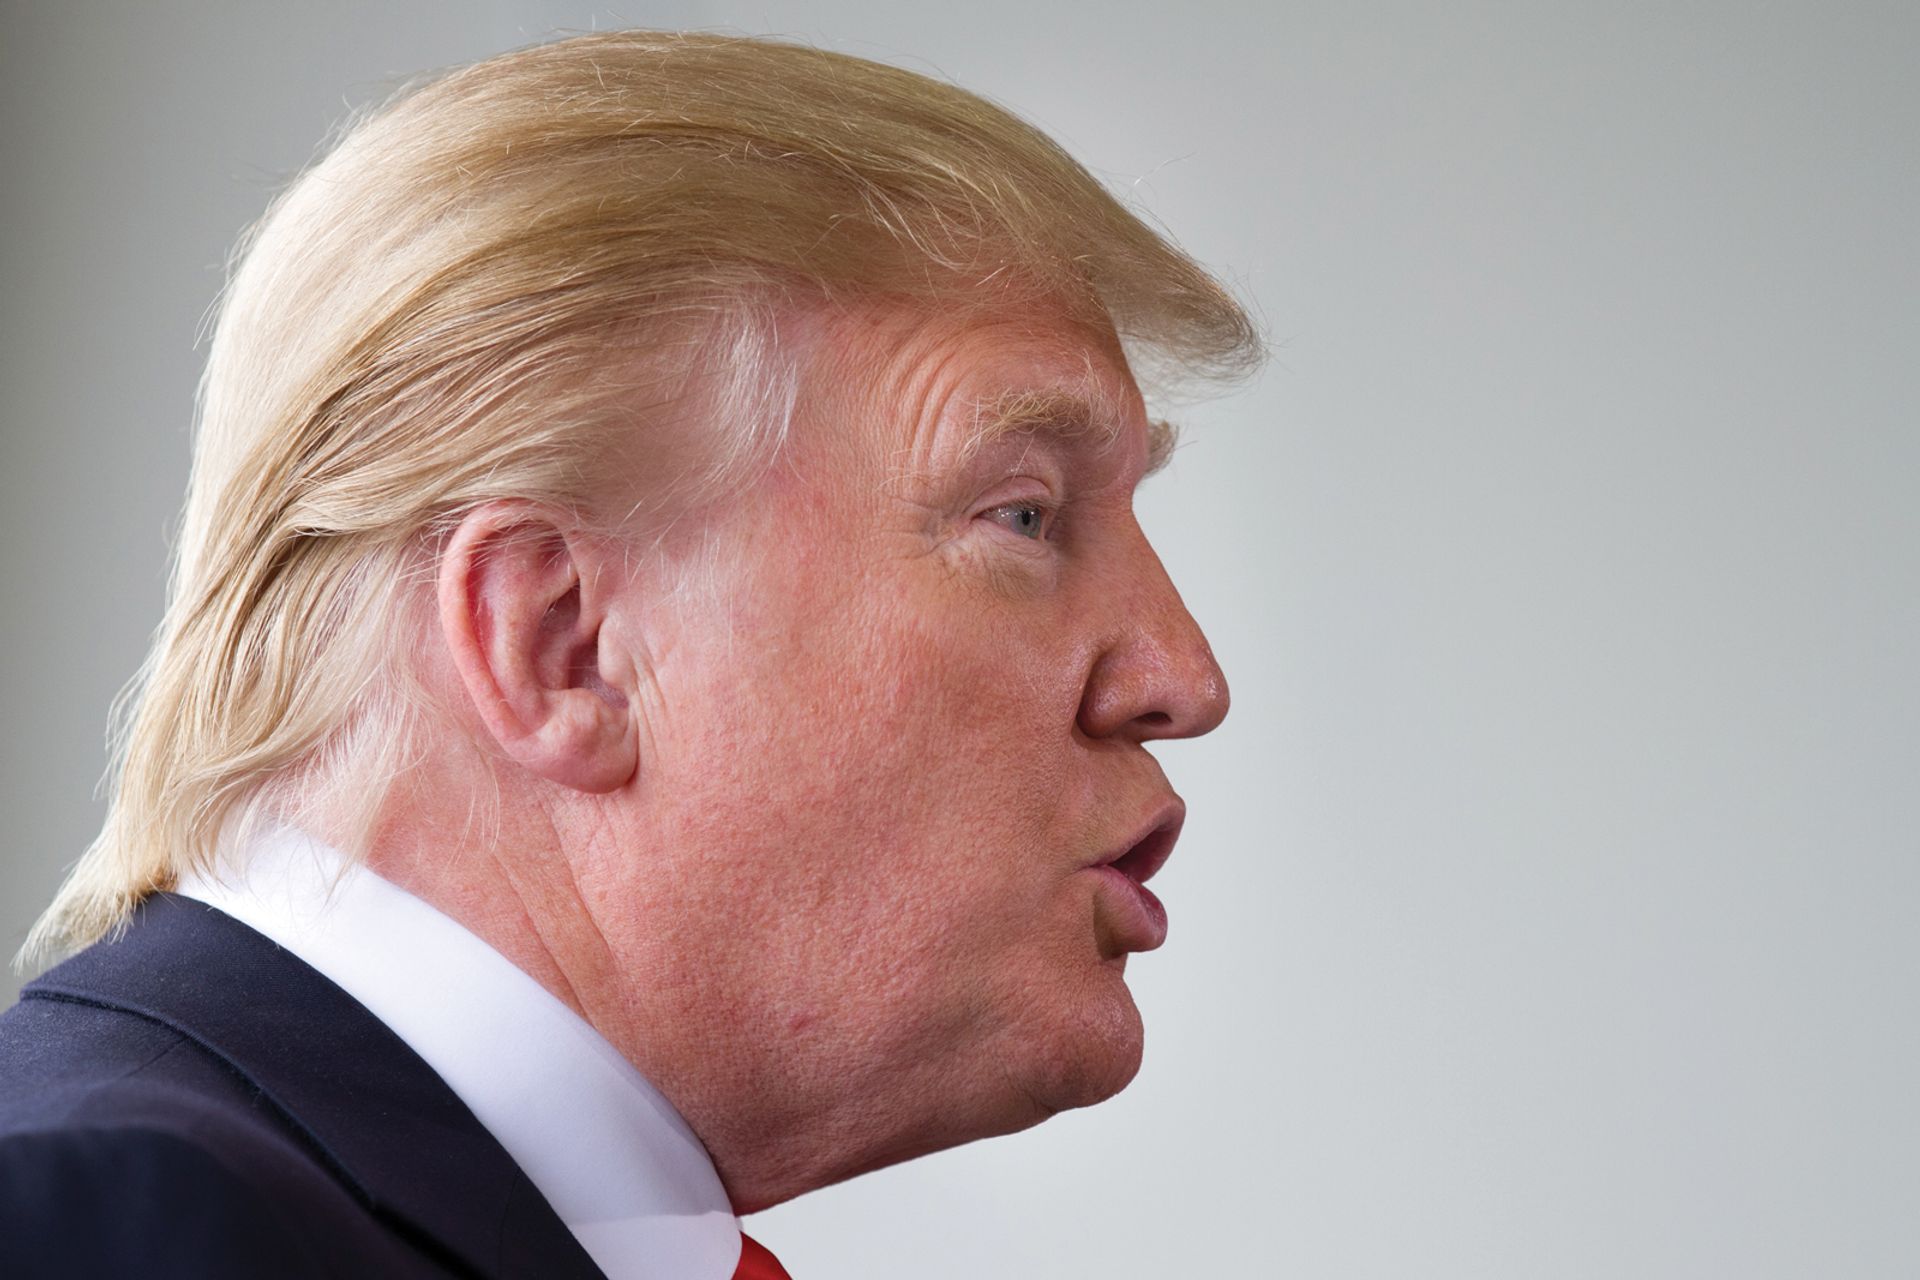 Donald Trump Matthew Cavanaugh/Getty Images